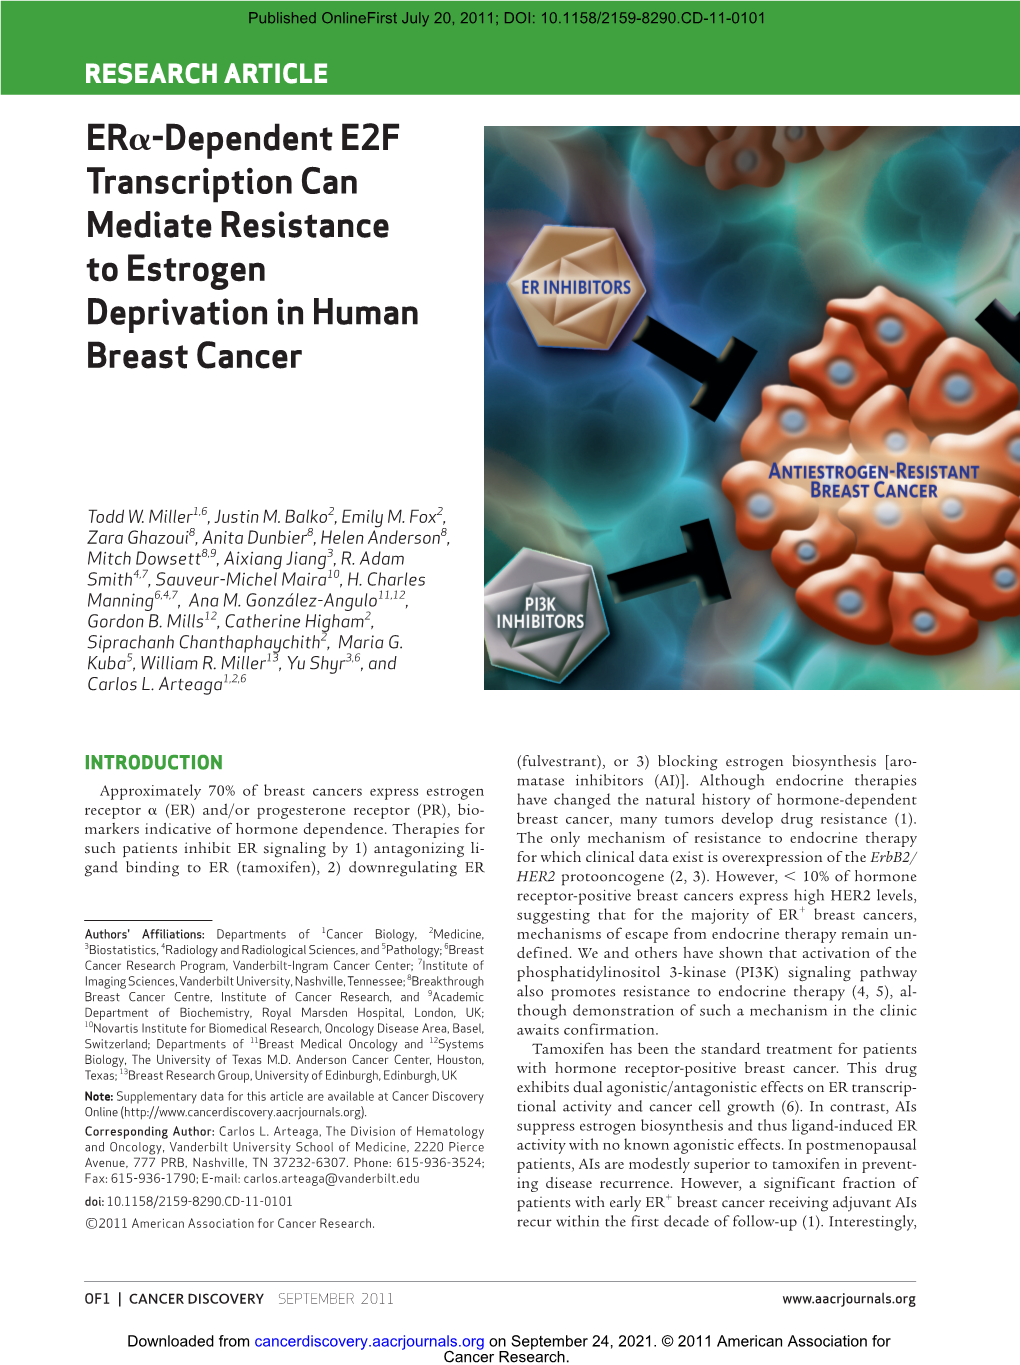 Era-Dependent E2F Transcription Can Mediate Resistance to Estrogen Deprivation in Human Breast Cancer